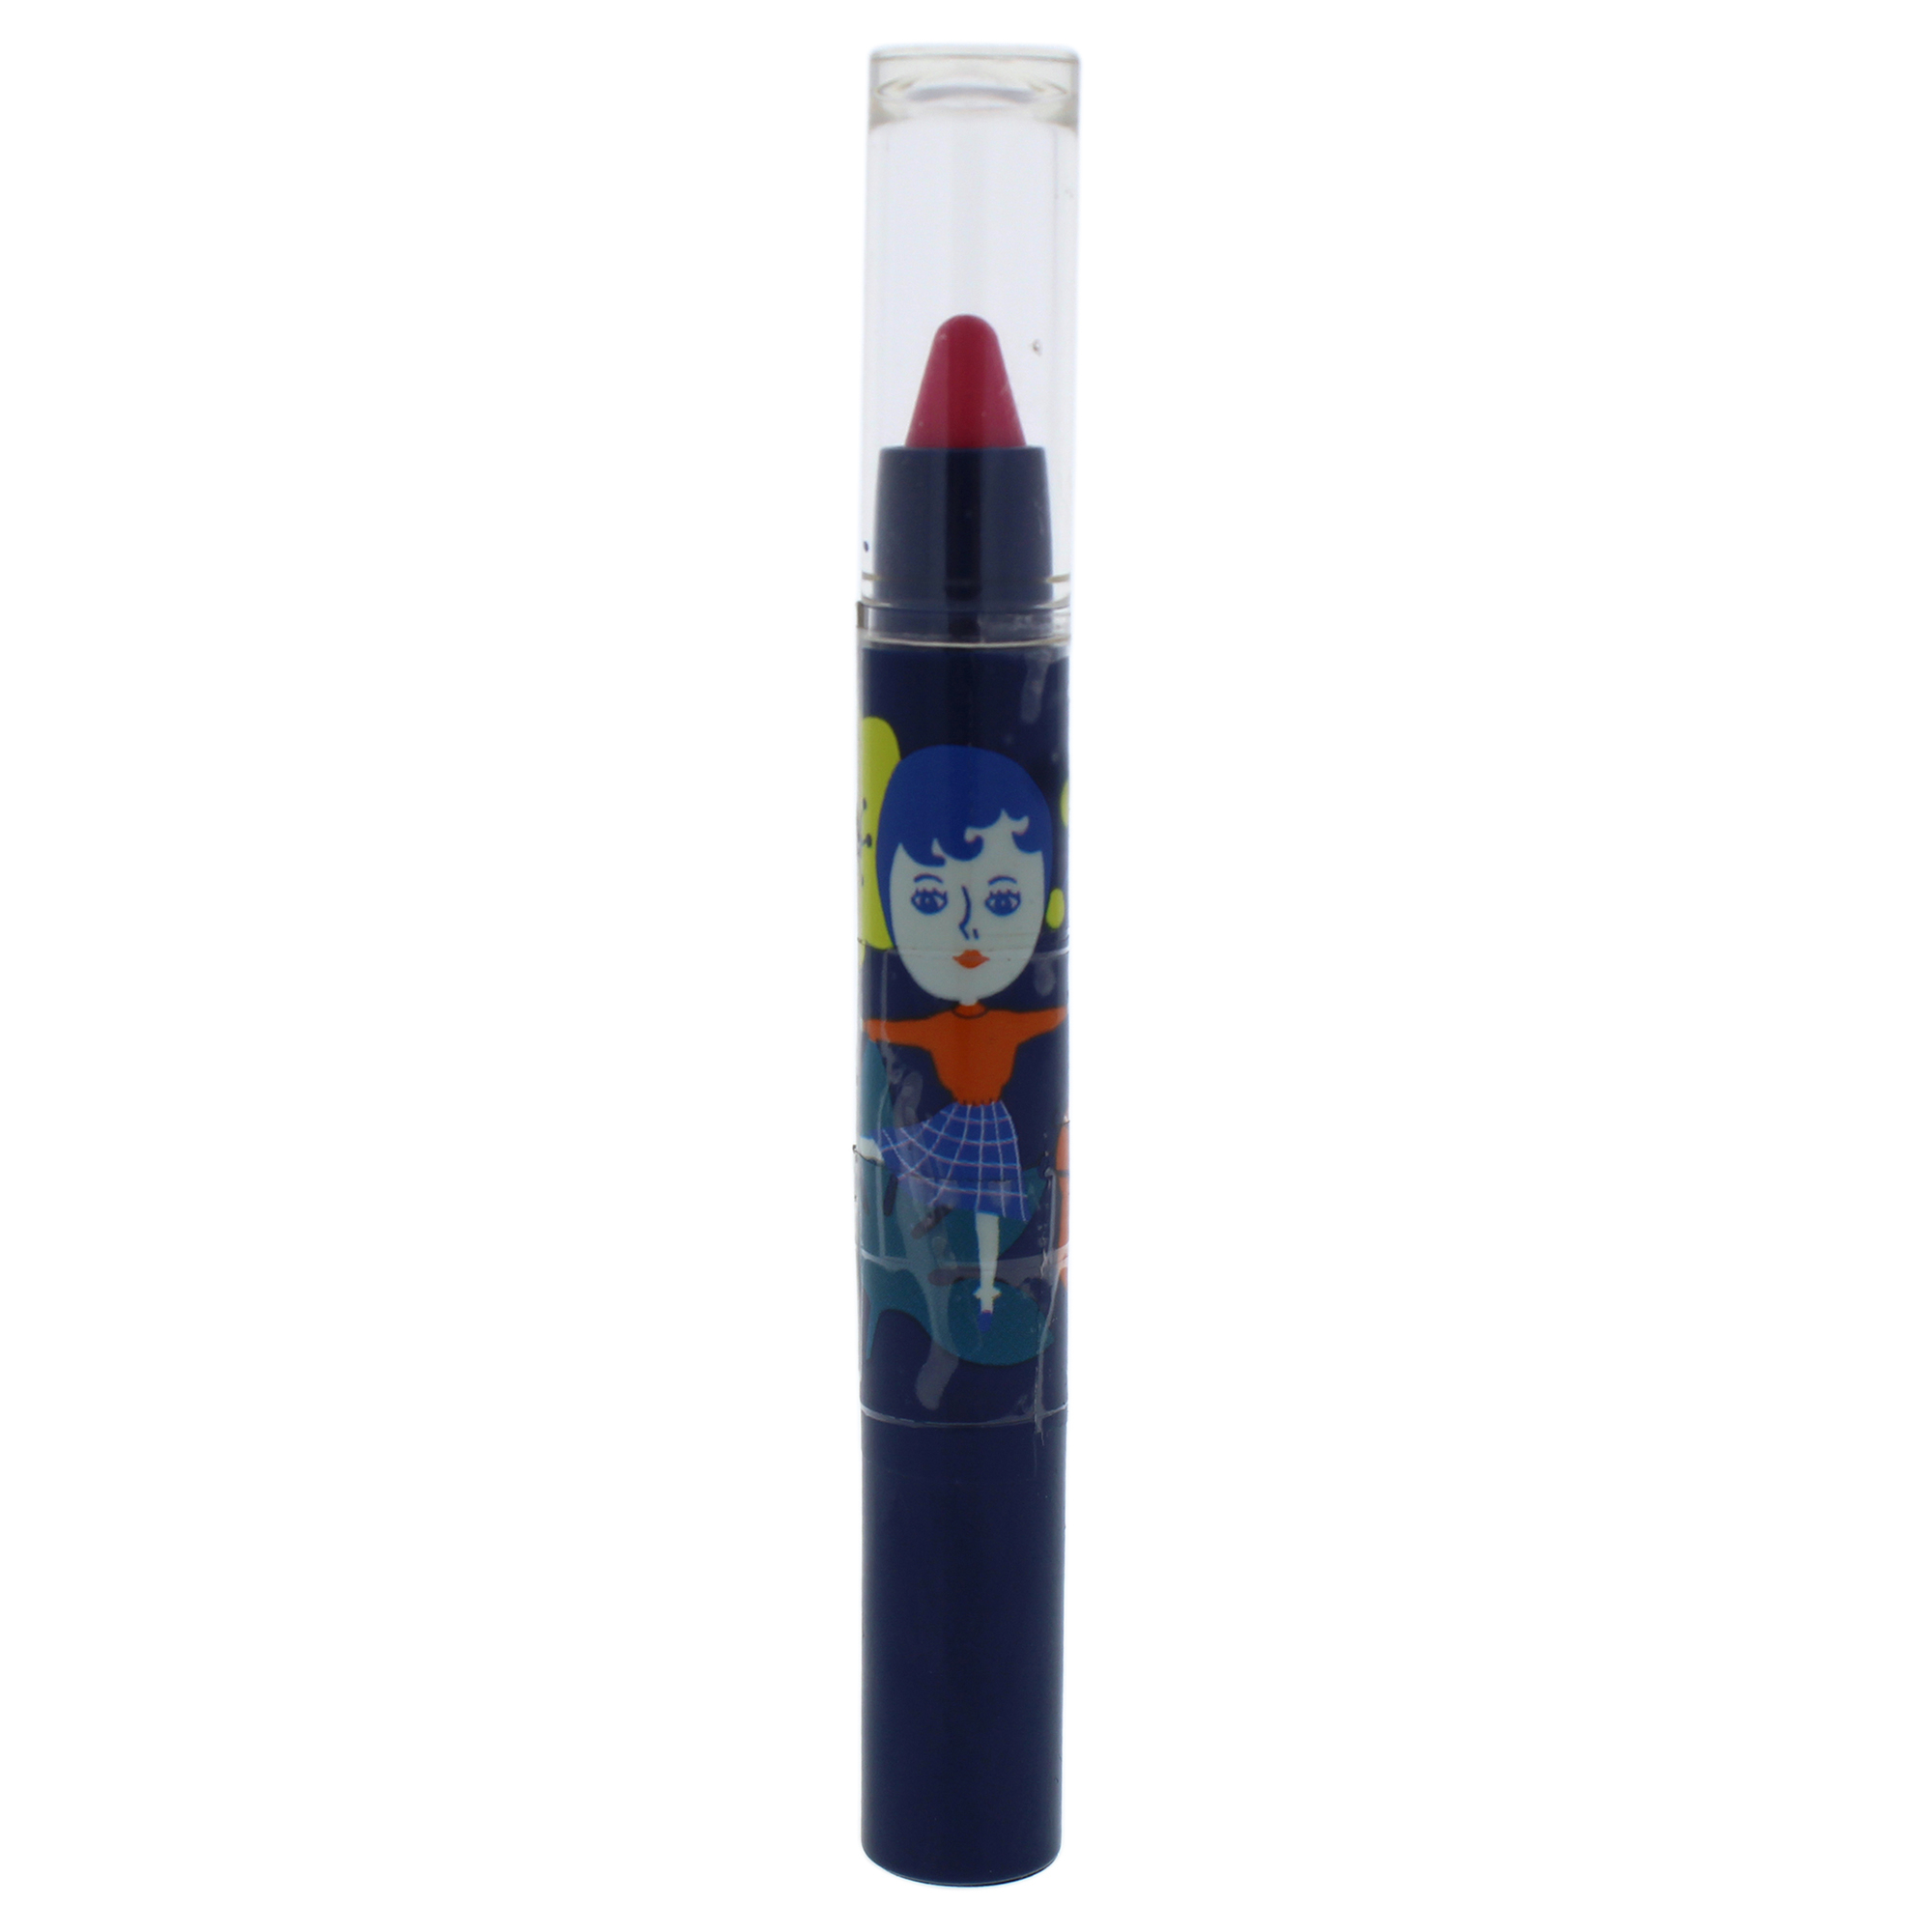 Crayon Lipstick - Bonjour Pink by Ooh Lala for Women - 0.05 oz Lipstick